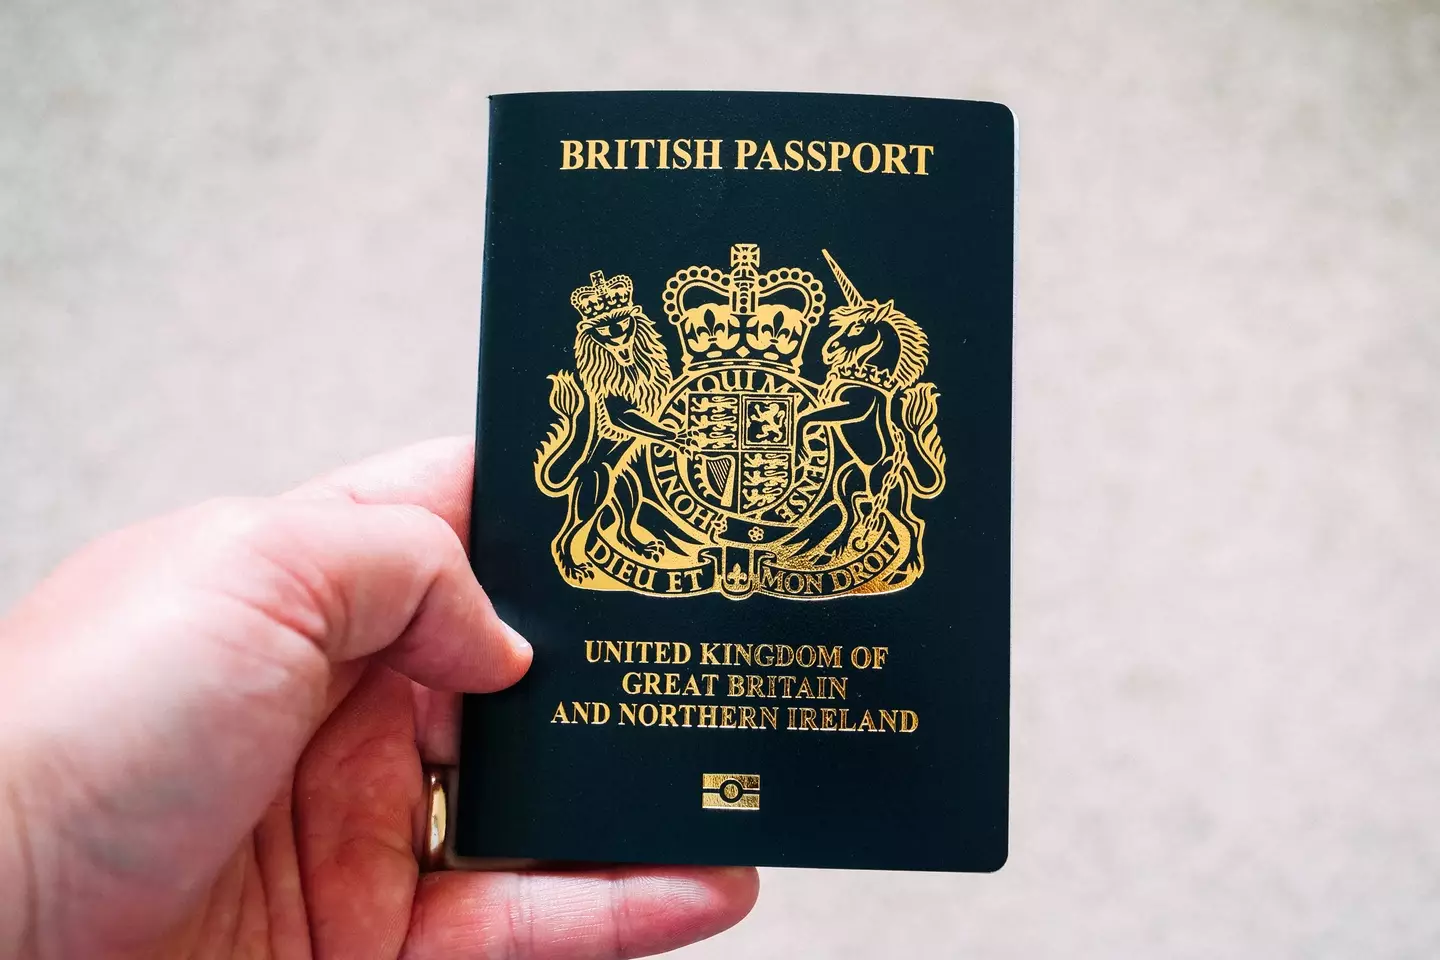 Still, blue passports though, eh?